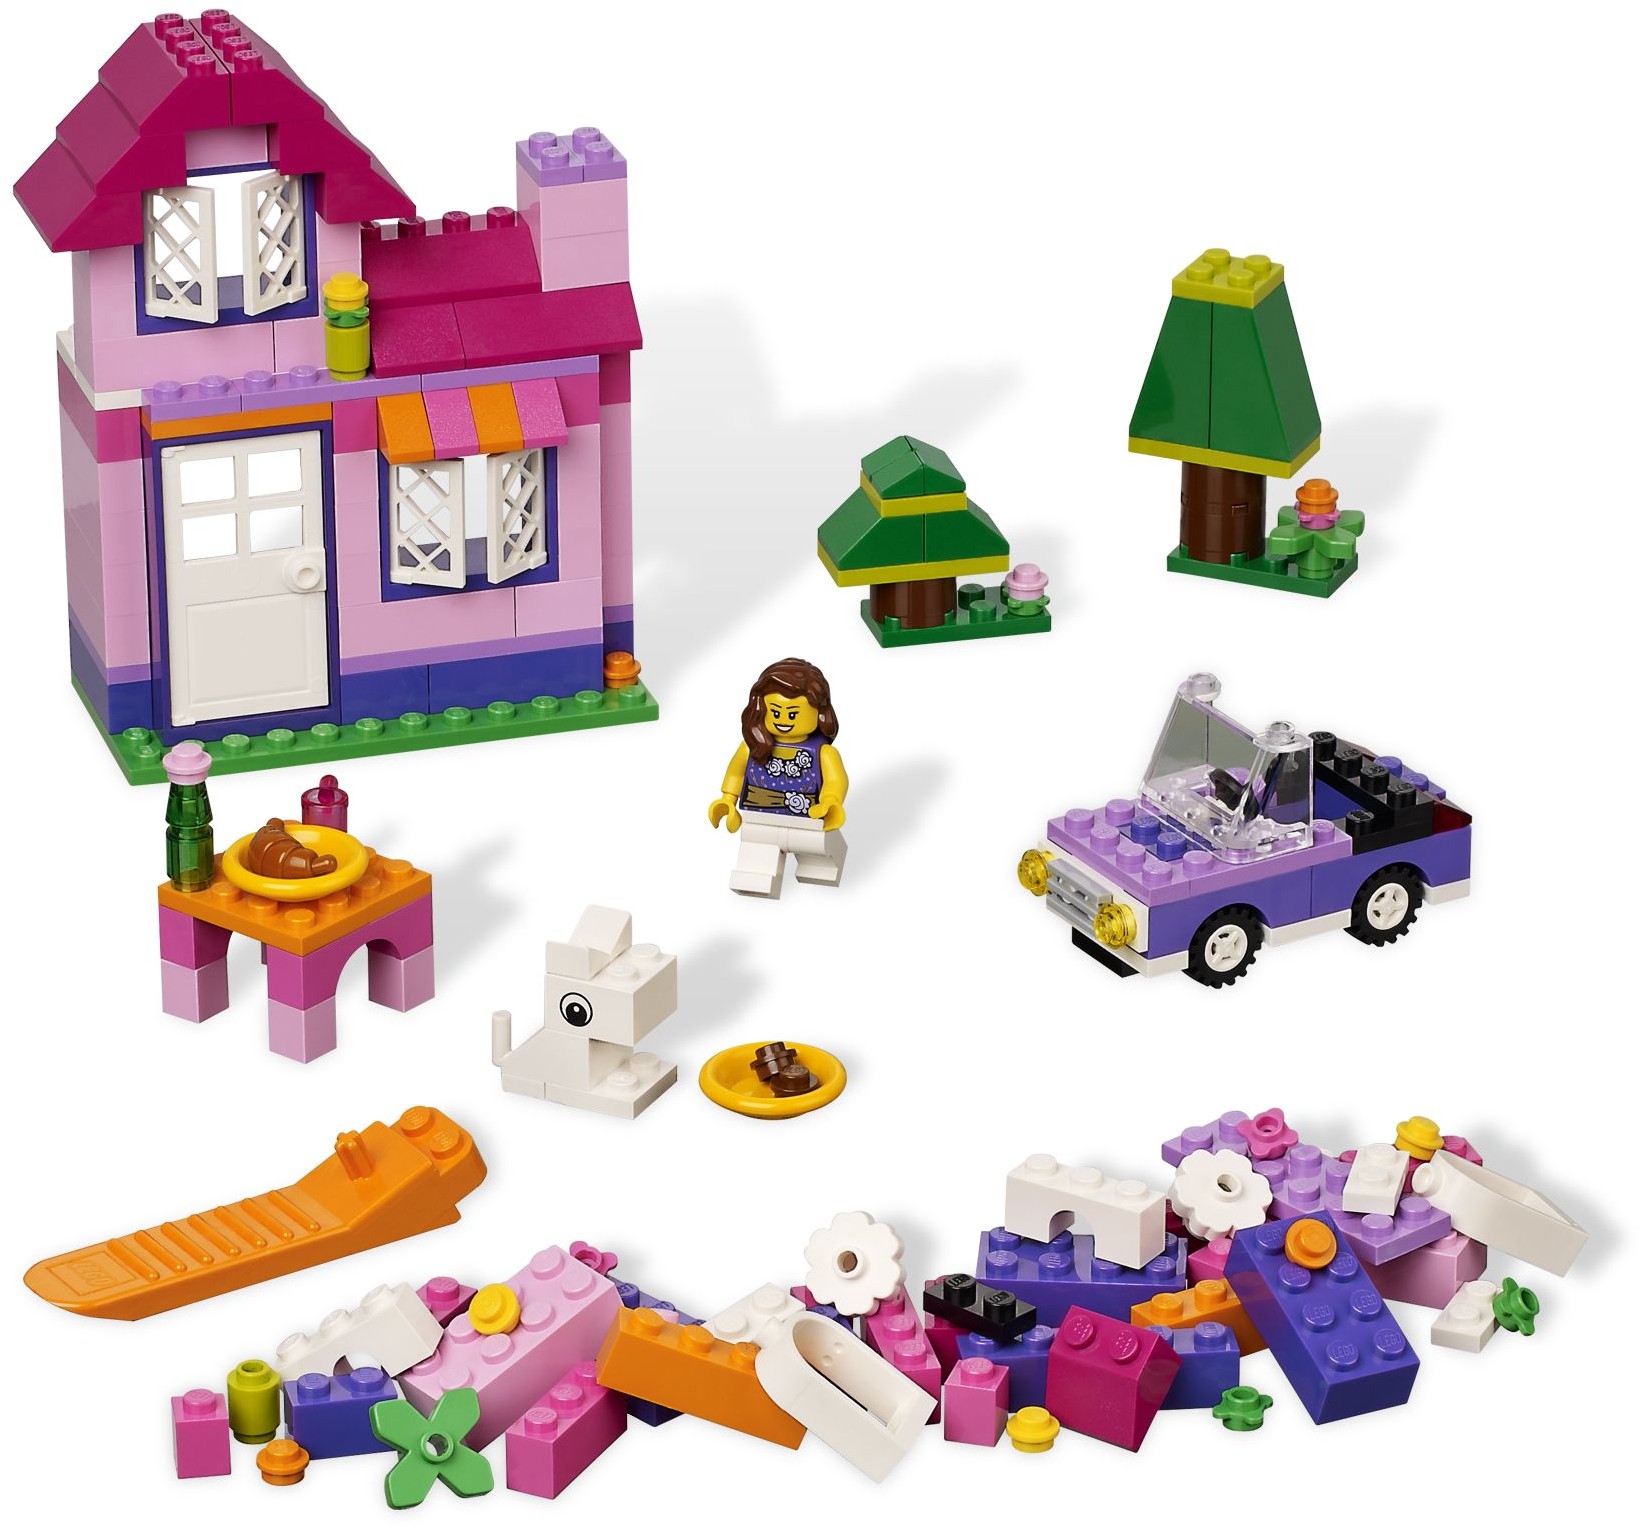 LEGO Bricks and More Large Pink Brick Box Set 5560 - US